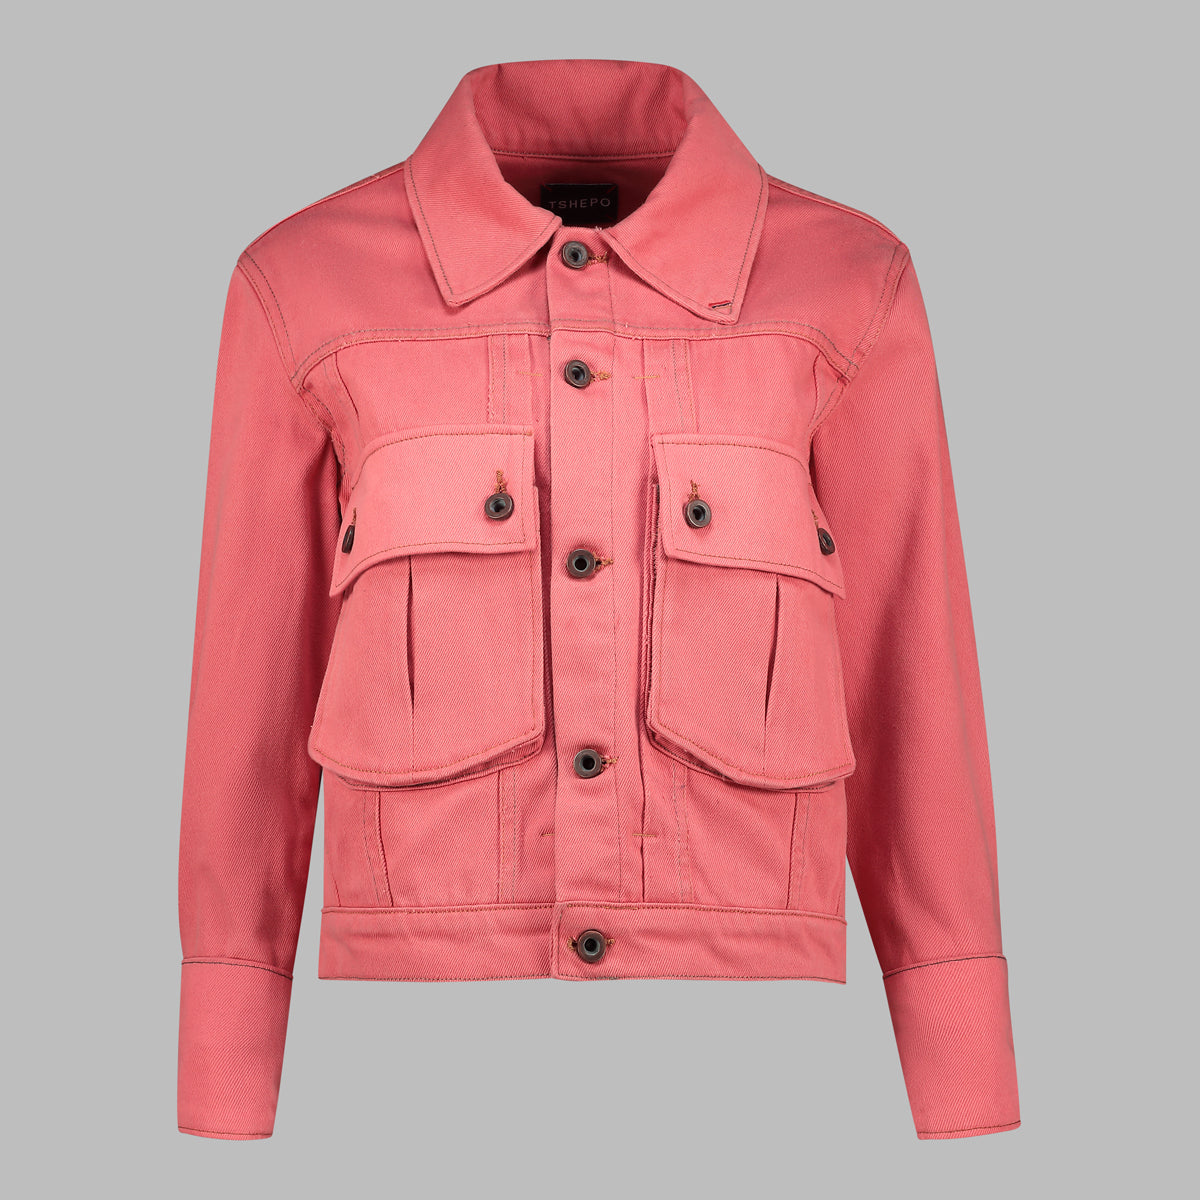 Tshepo pink jacket on mannequin